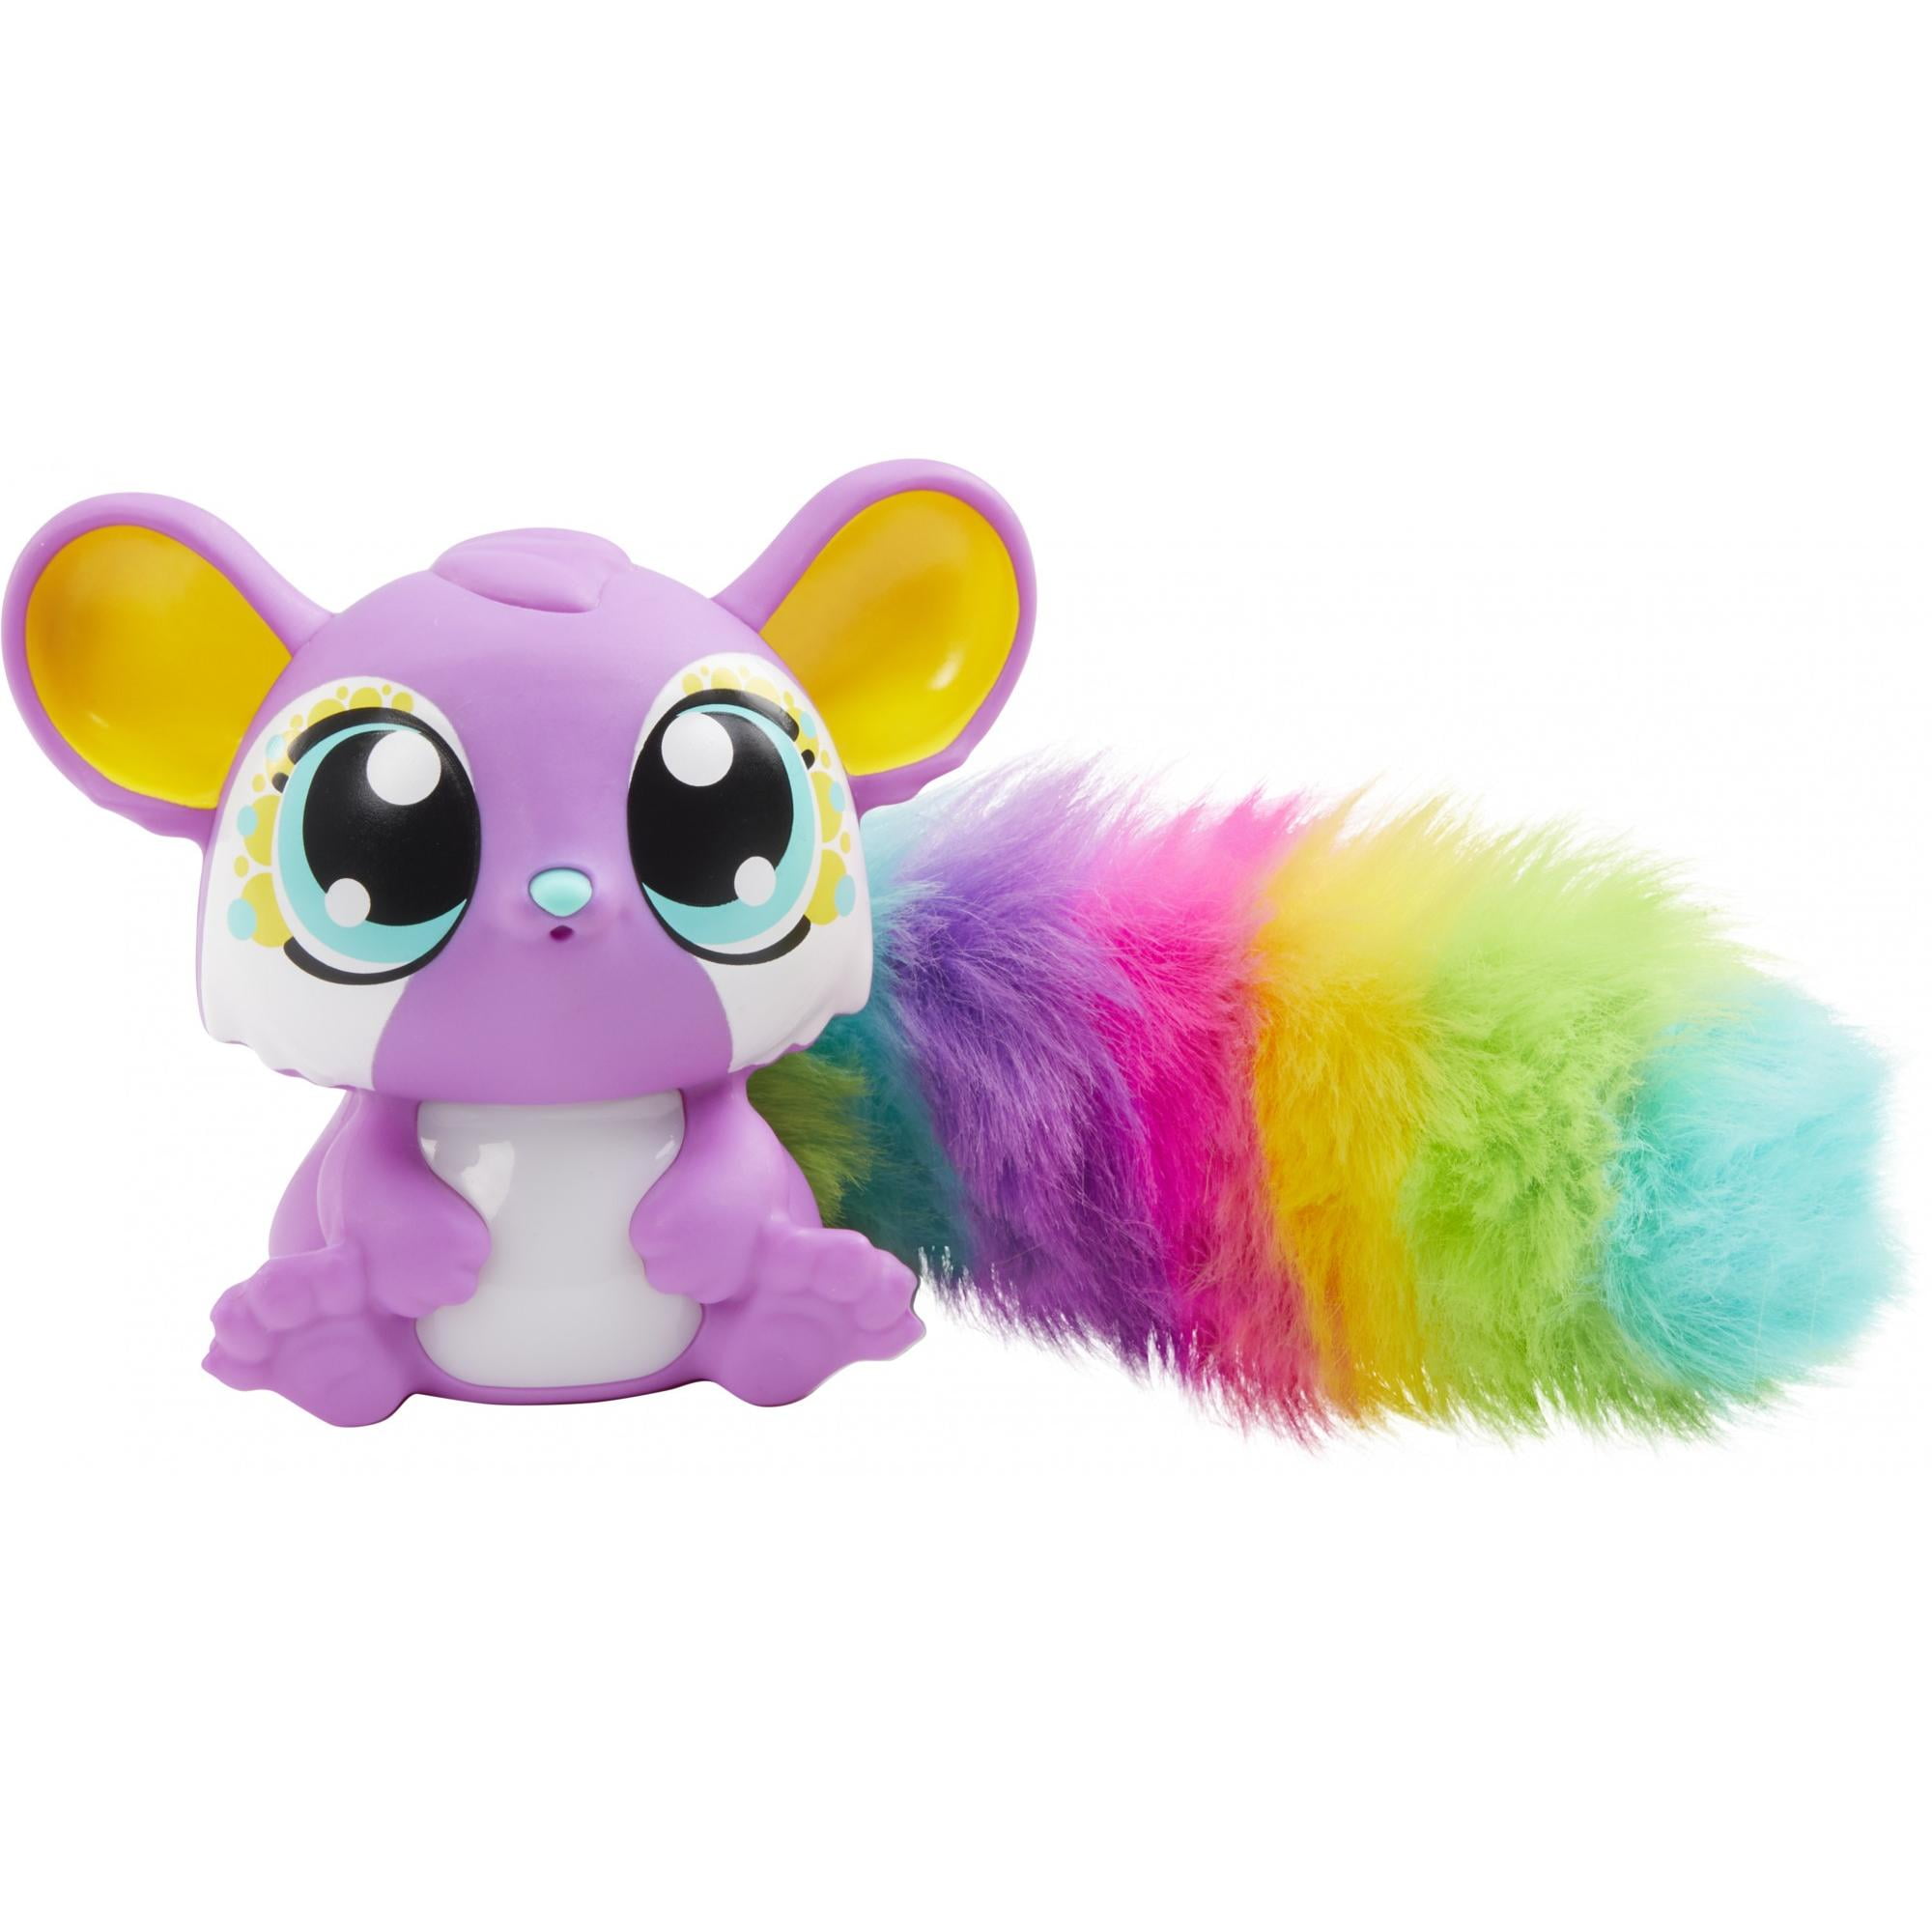 Lil Gleemerz Purple Adorbrite Interactive Light Up Toy Figure New 